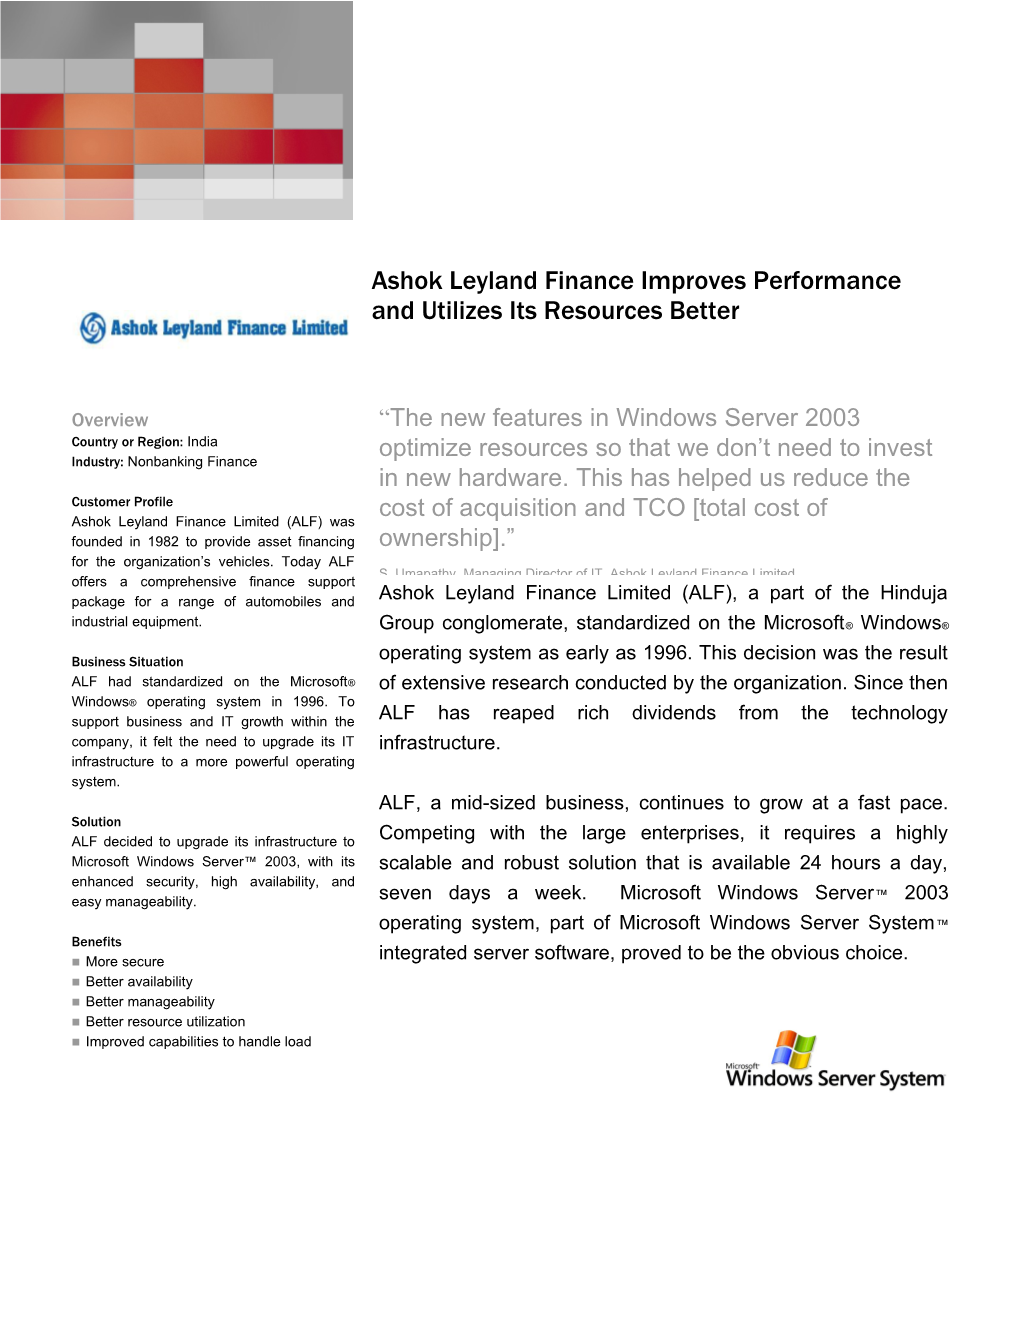 Ashok Leyland Finance Improves Performance and Utilizes Its Resources Better